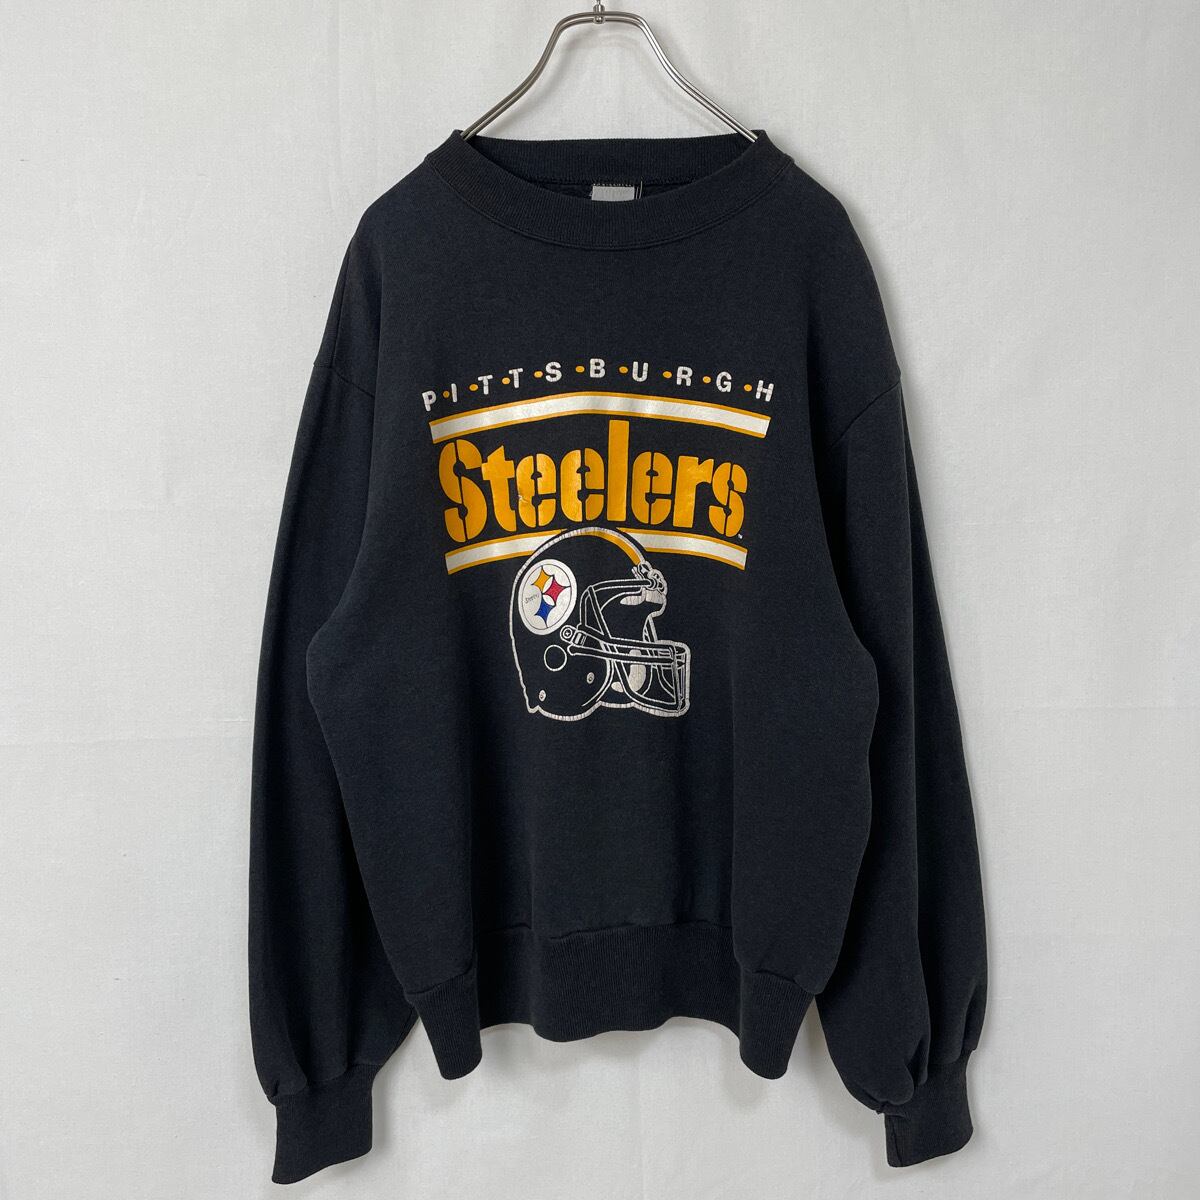 90s NFL Steelers スウェット 古着 スティーラーズ 黒 ブラック